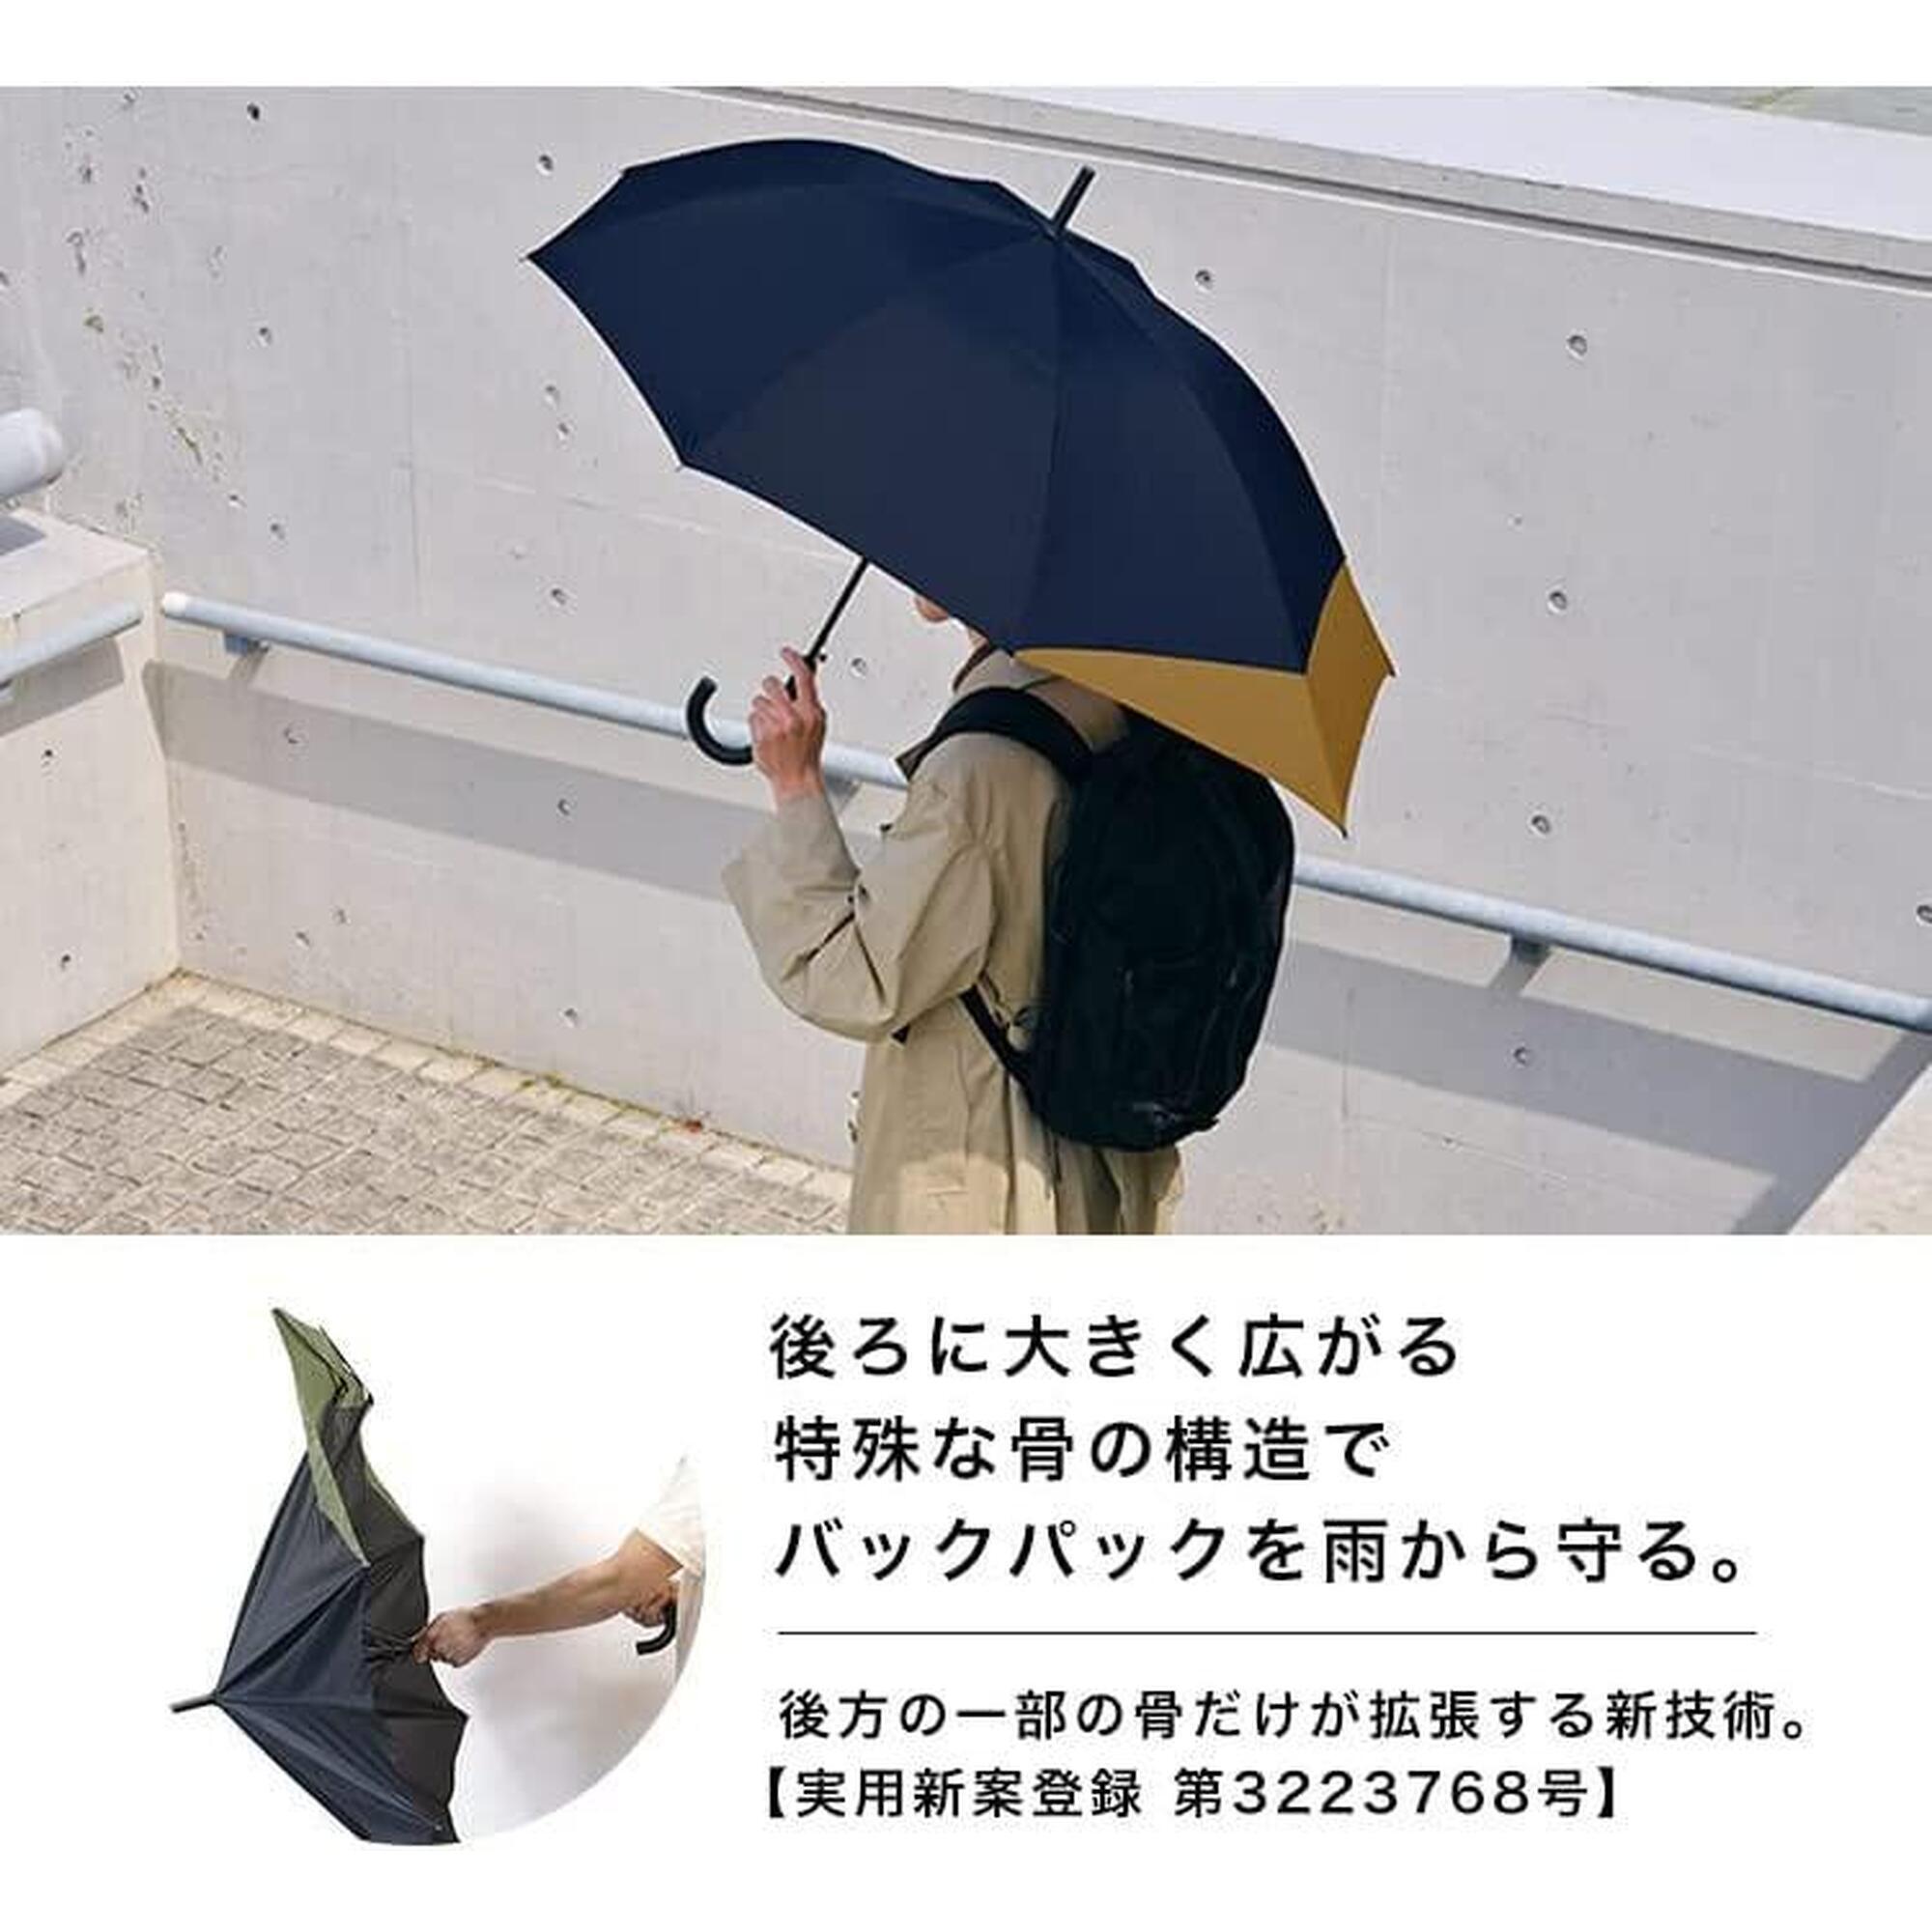 UX 戶外情侶長雨傘 - 深藍色及焦糖色